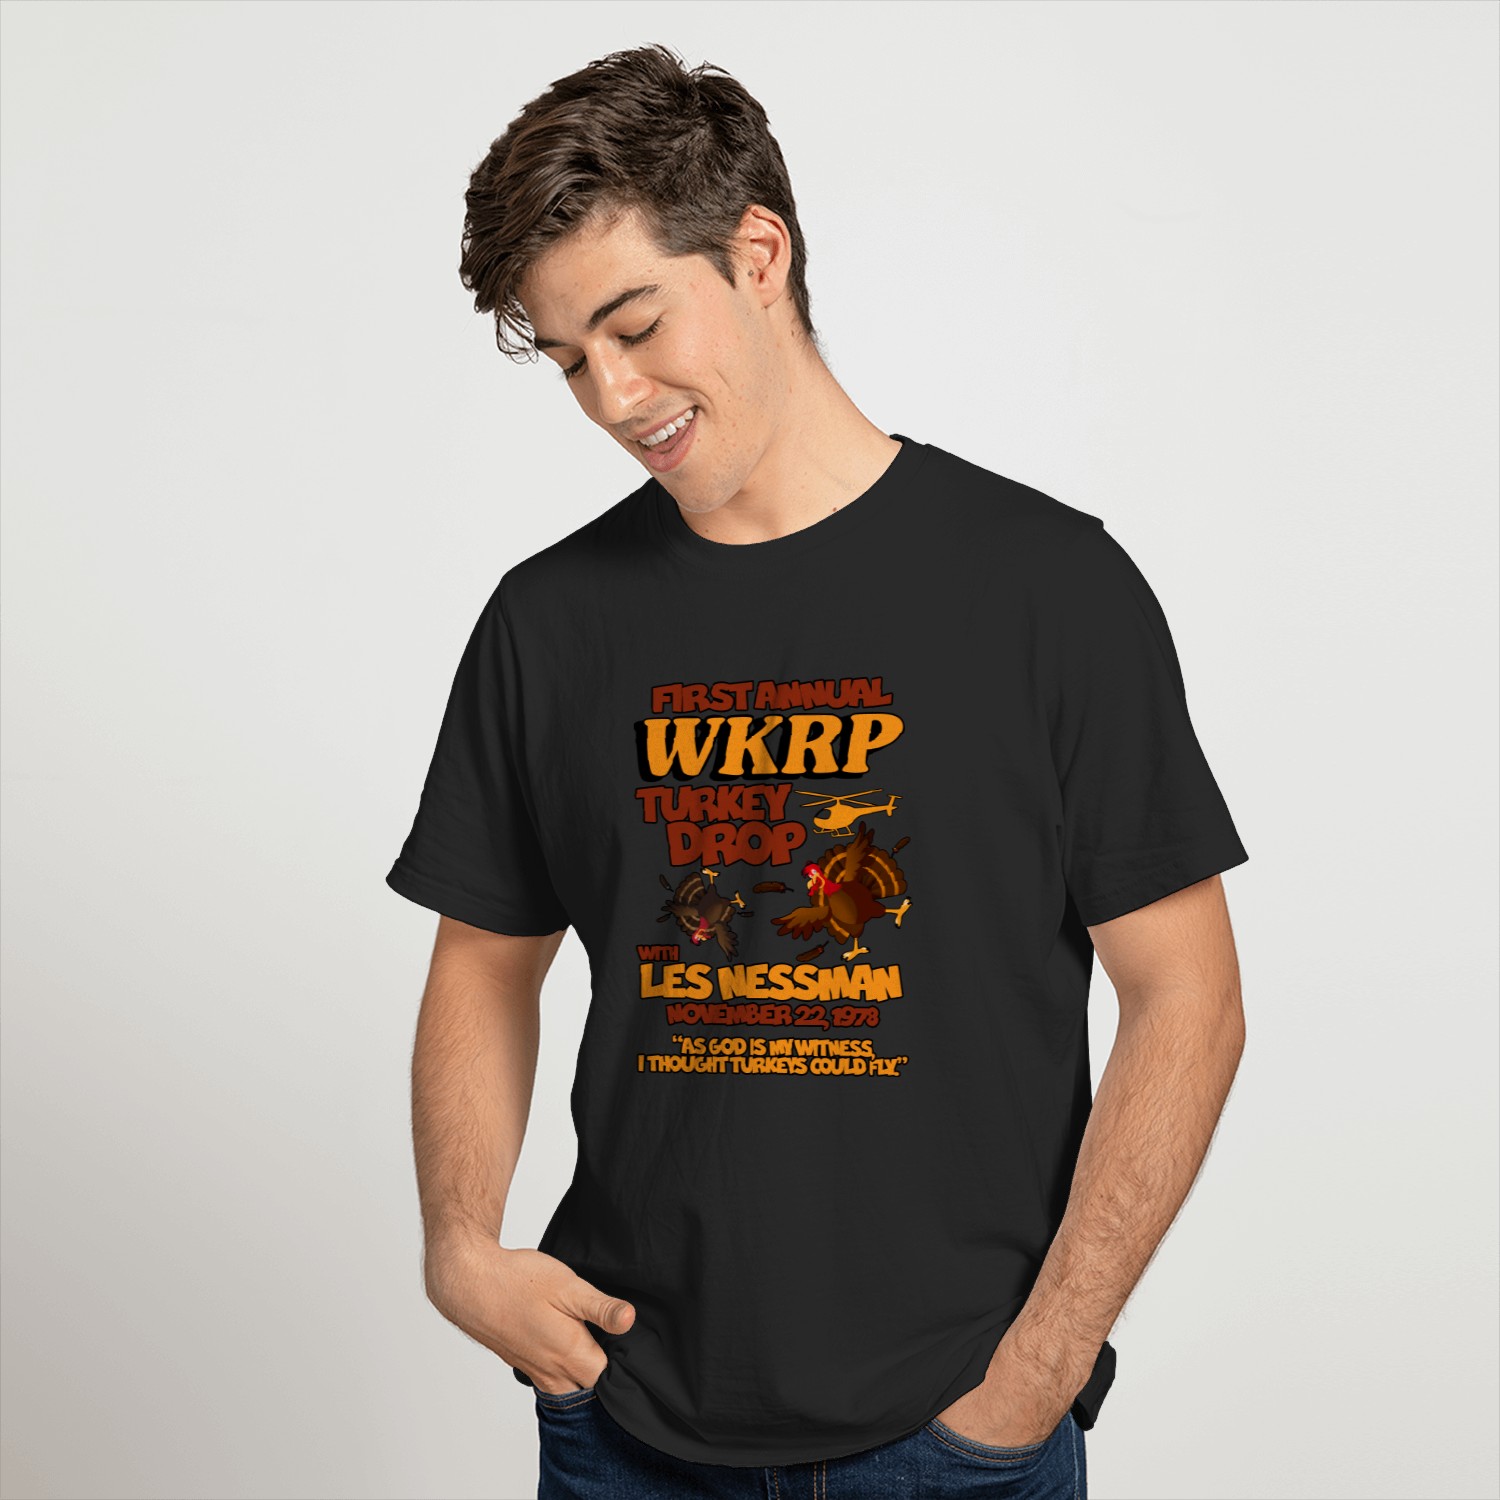 Thanksgiving 1st Annual WKRP Turkey Drop T Shirt